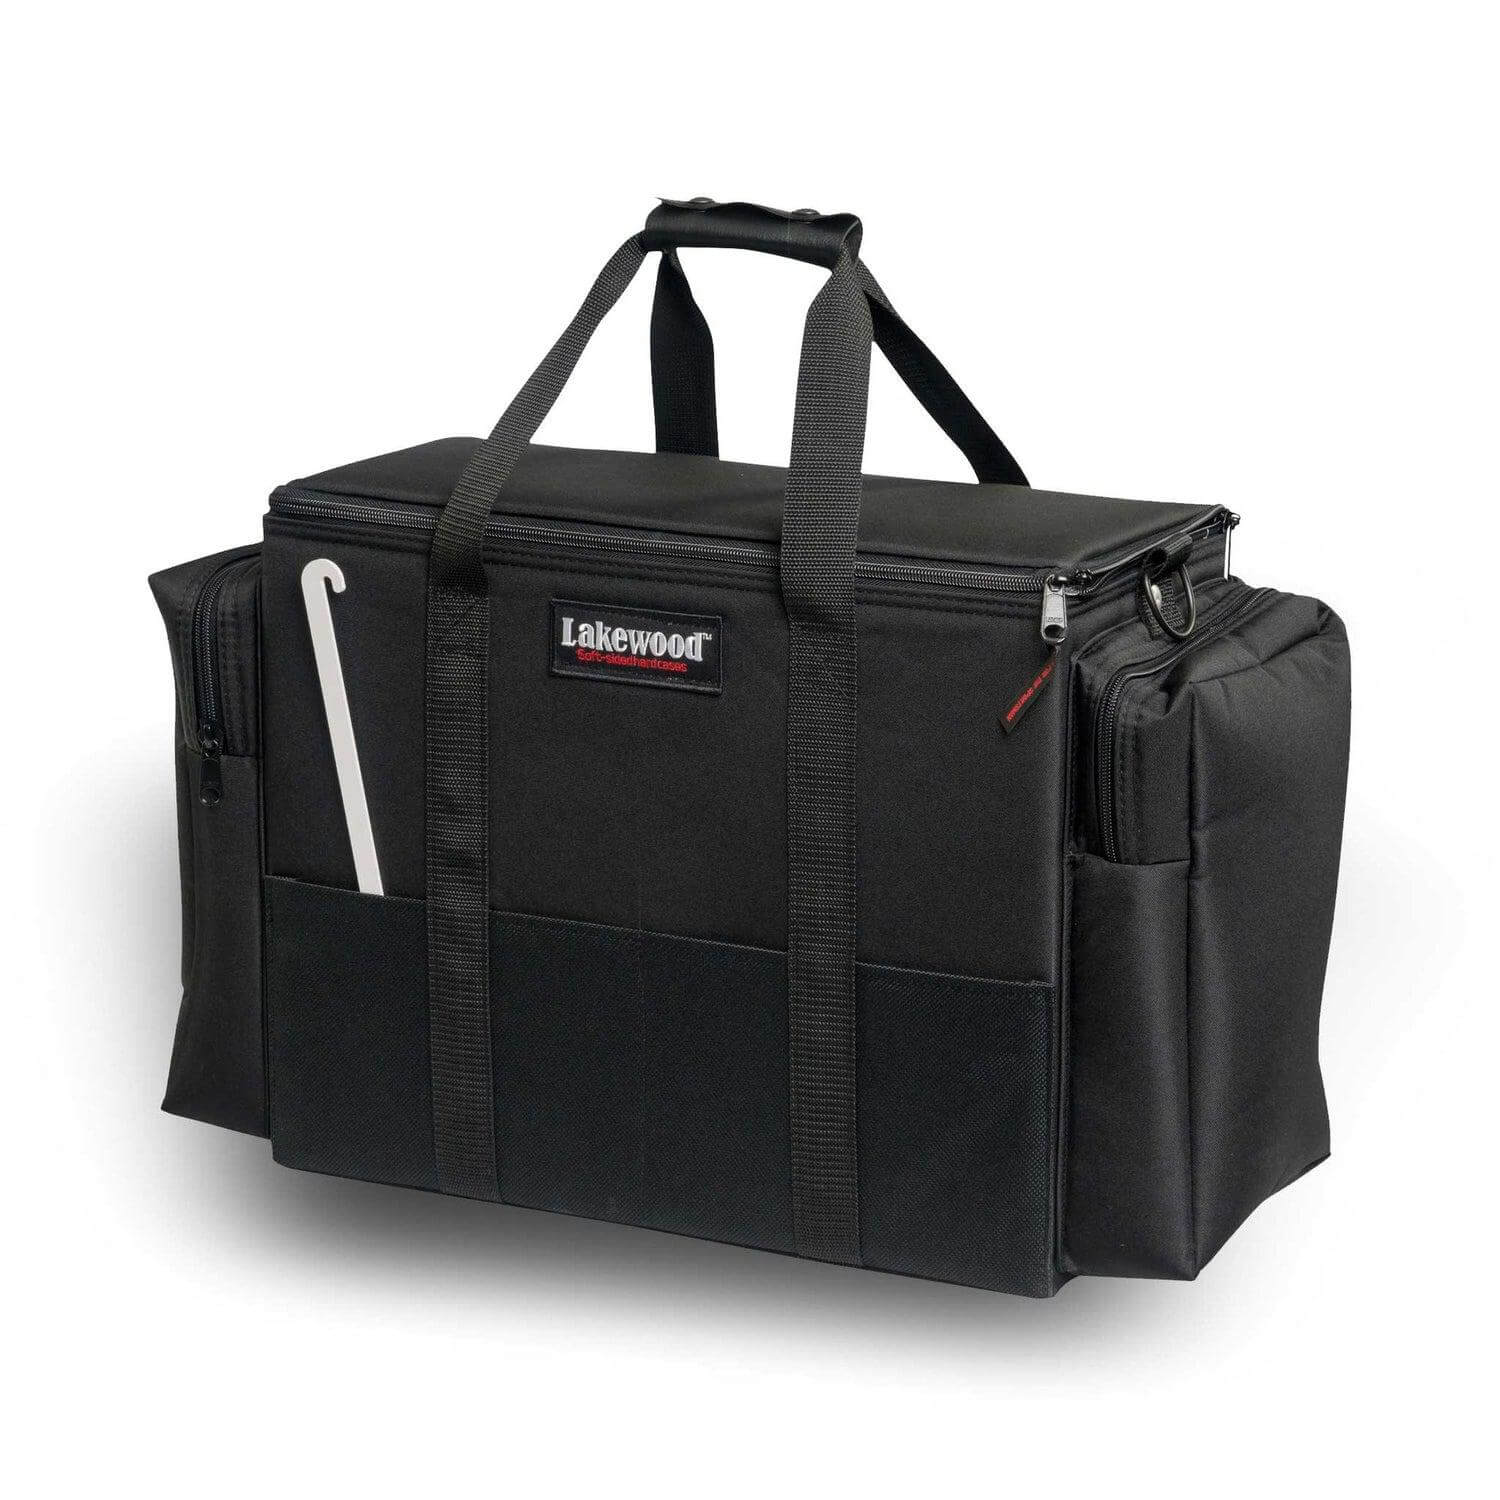 Lakewood Musky Case Upright Tackle Bag | musky lures storage Black